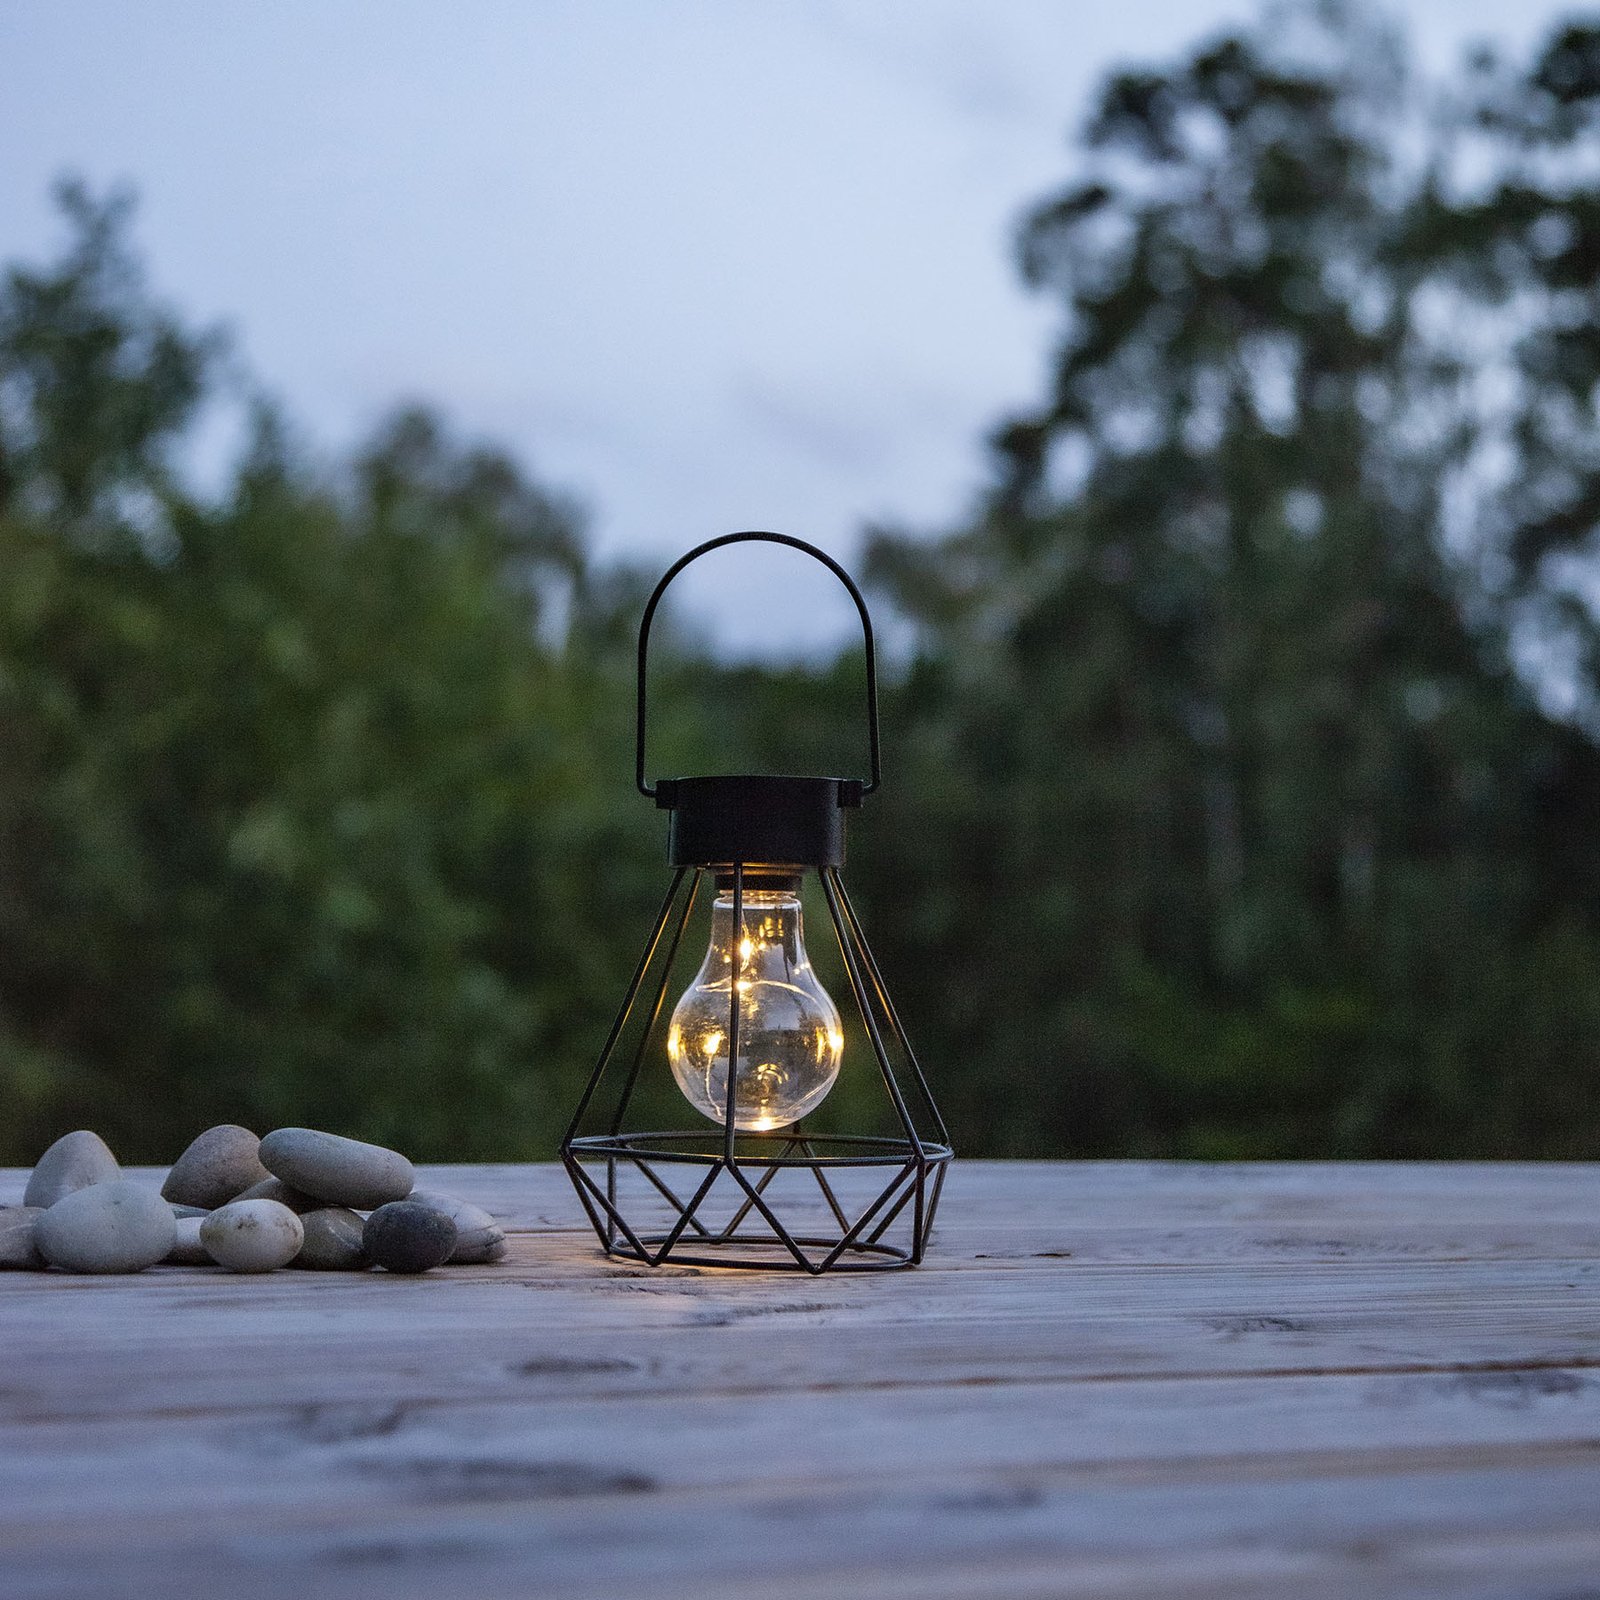 Eddy LED solar decorative lantern, cage lampshade